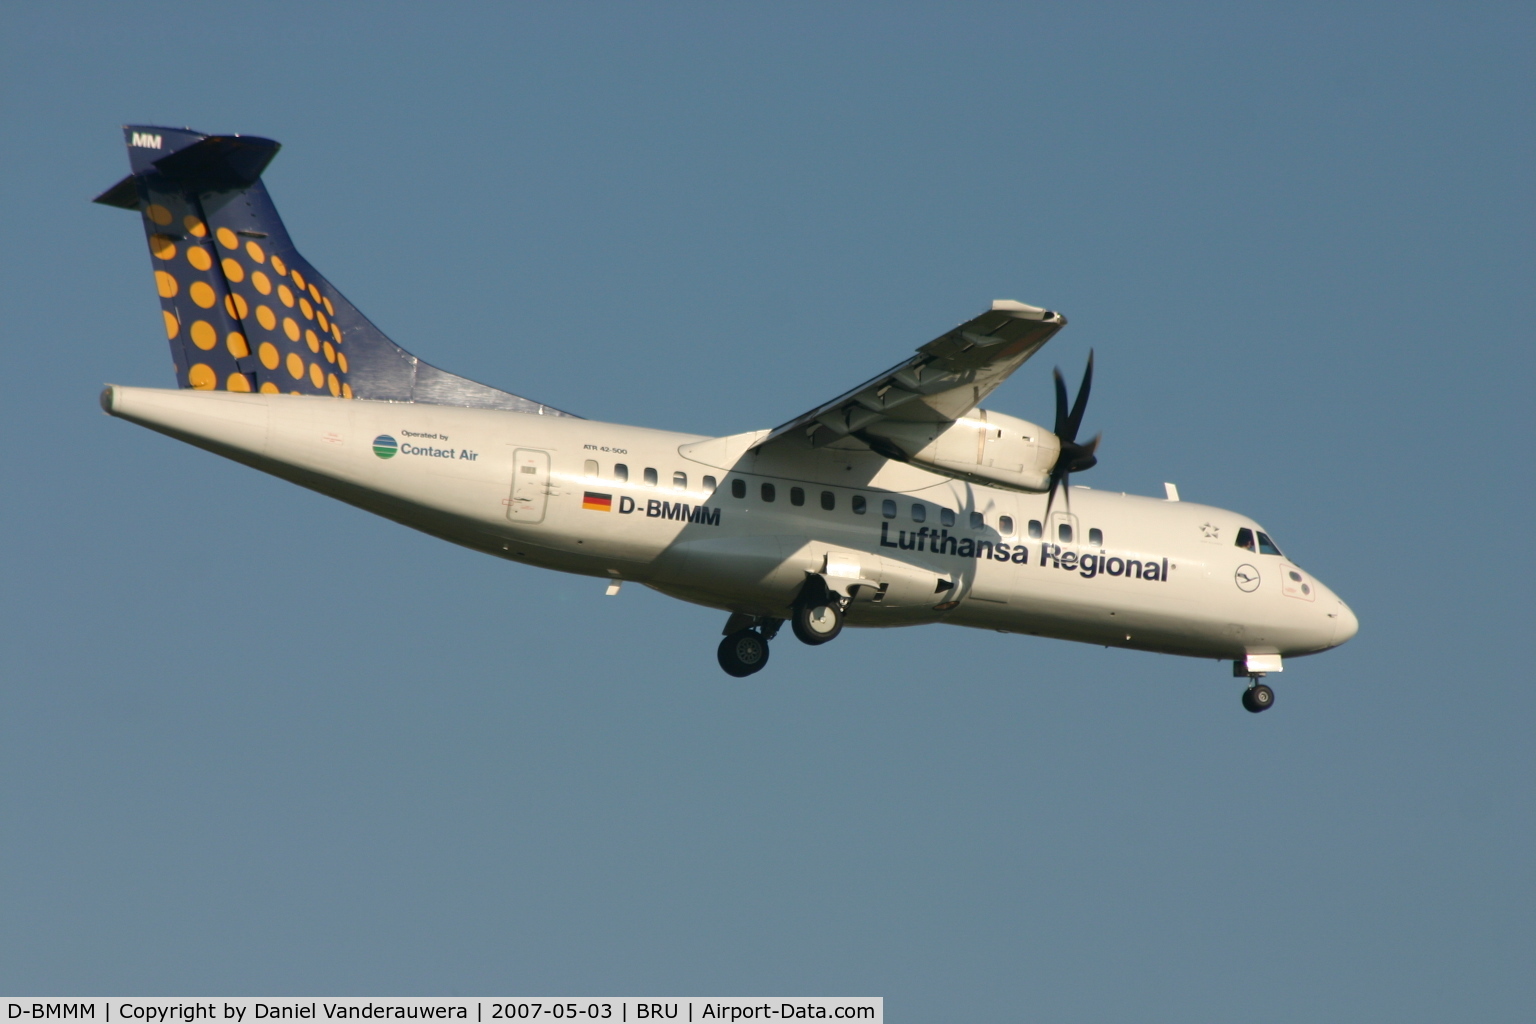 D-BMMM, 1997 ATR 42-500 C/N 546, flight LH4650 is descending to rwy 02